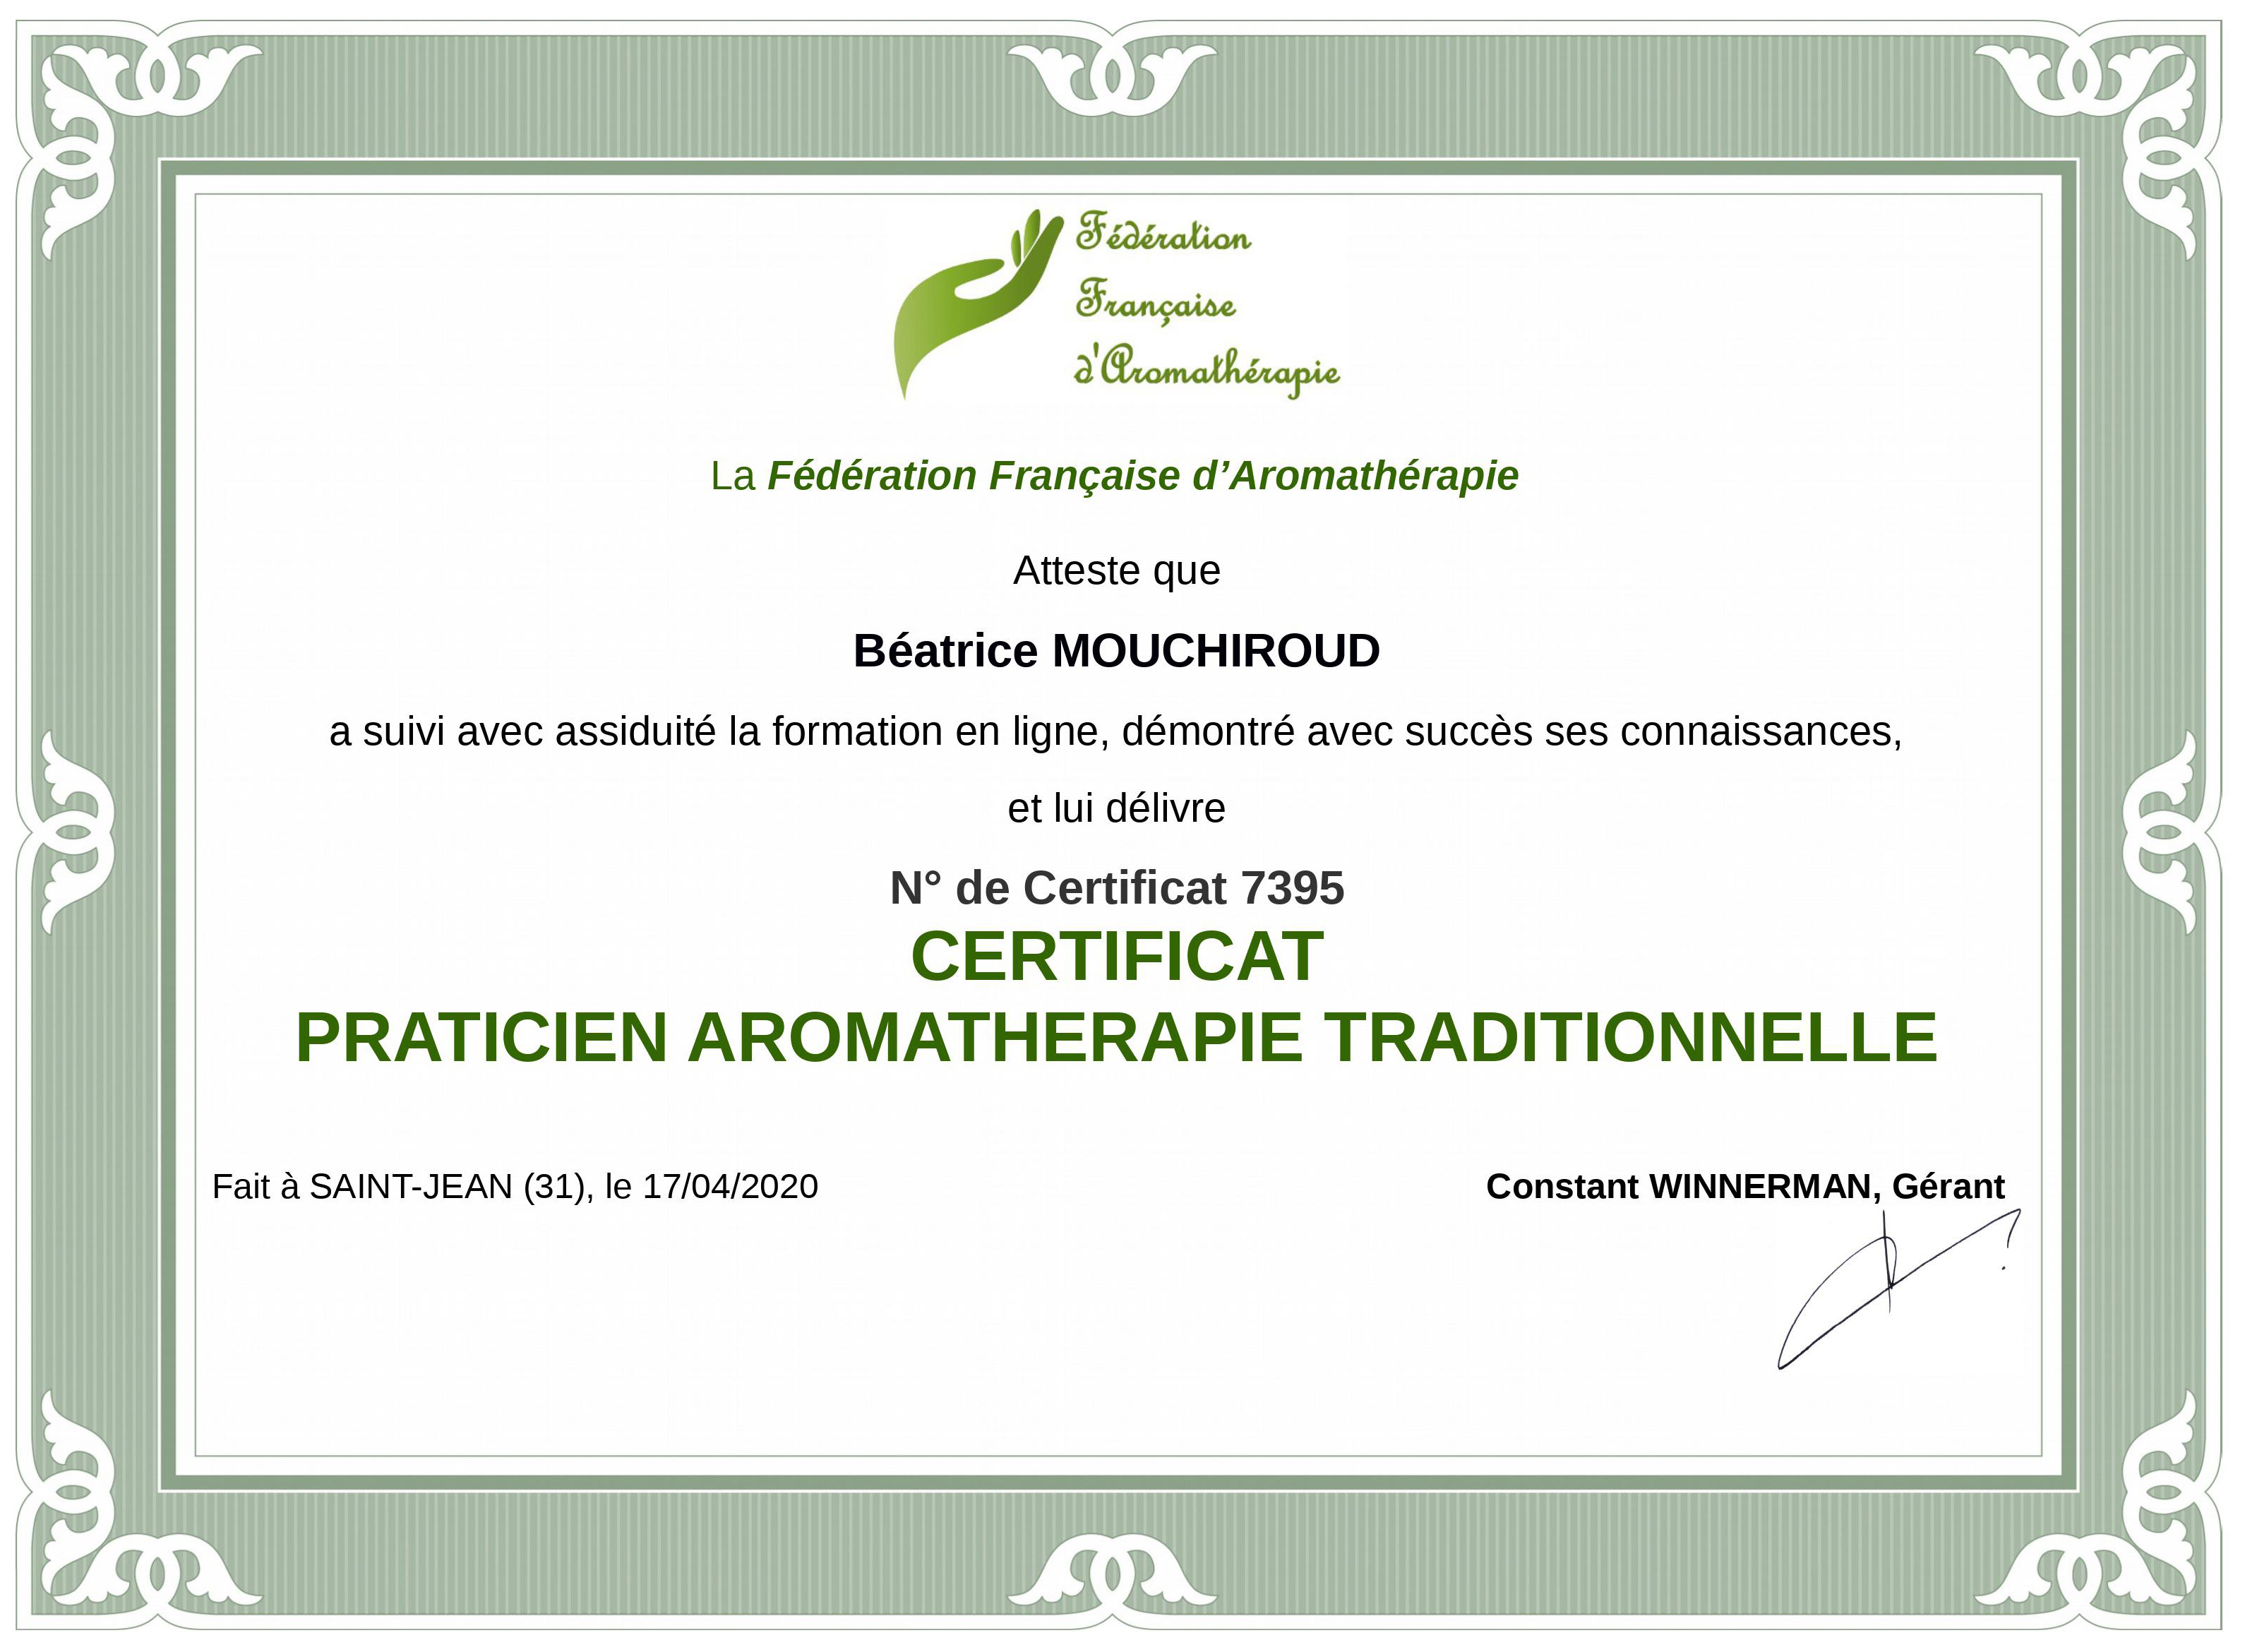 Certificat Praticien Aromatherapie Traditionnelle